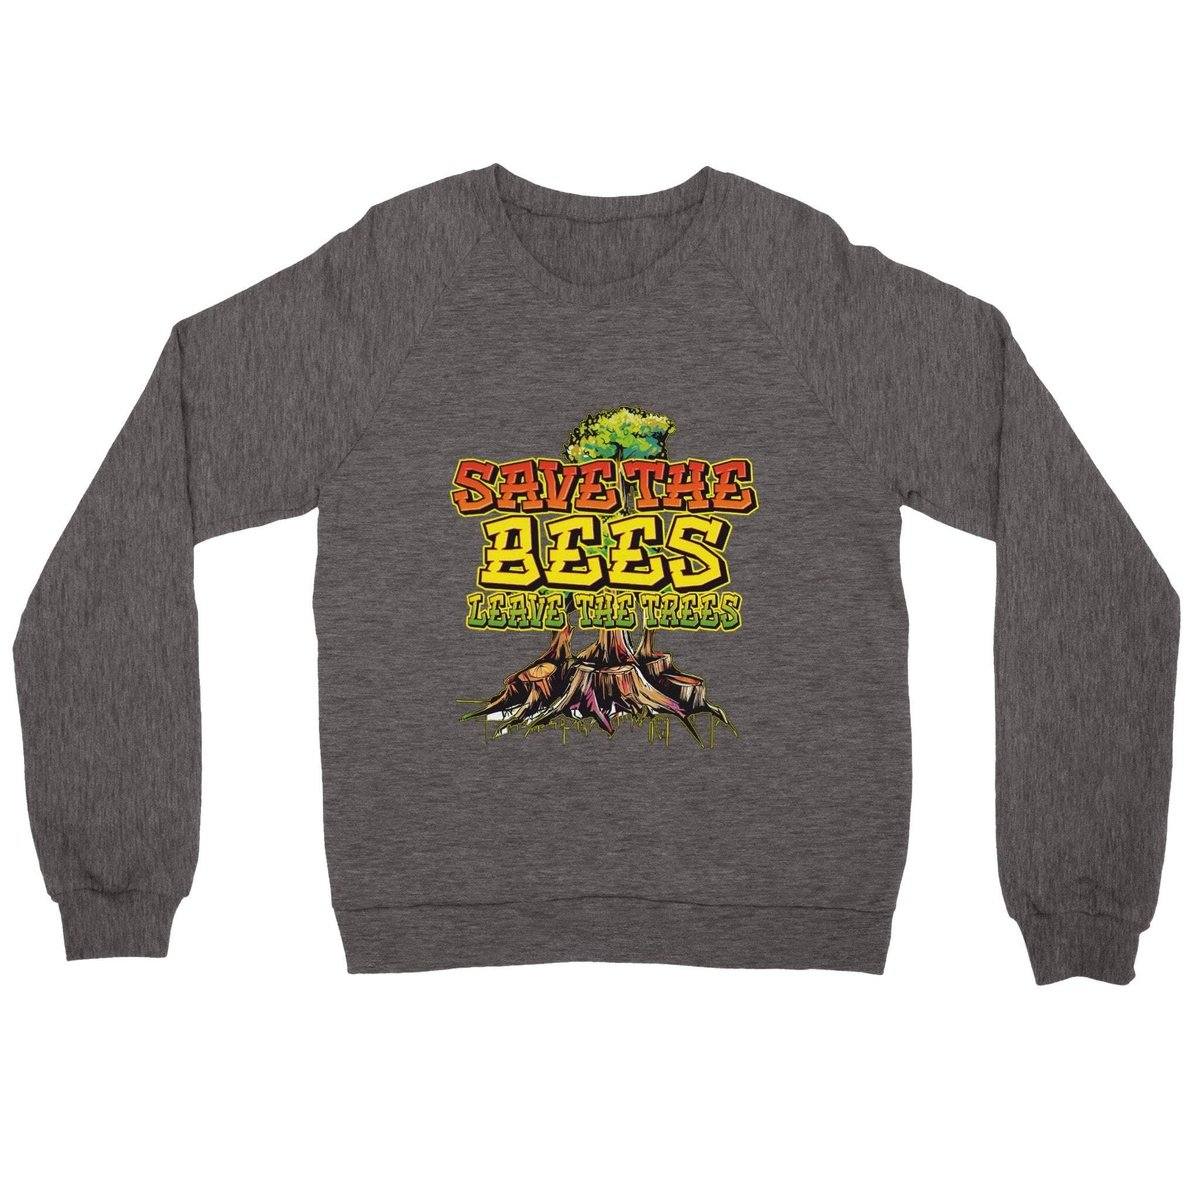 Save The Bees Jumper - Leave The Trees - Stumps - Premium Unisex Crewneck Sweatshirt Australia Online Color